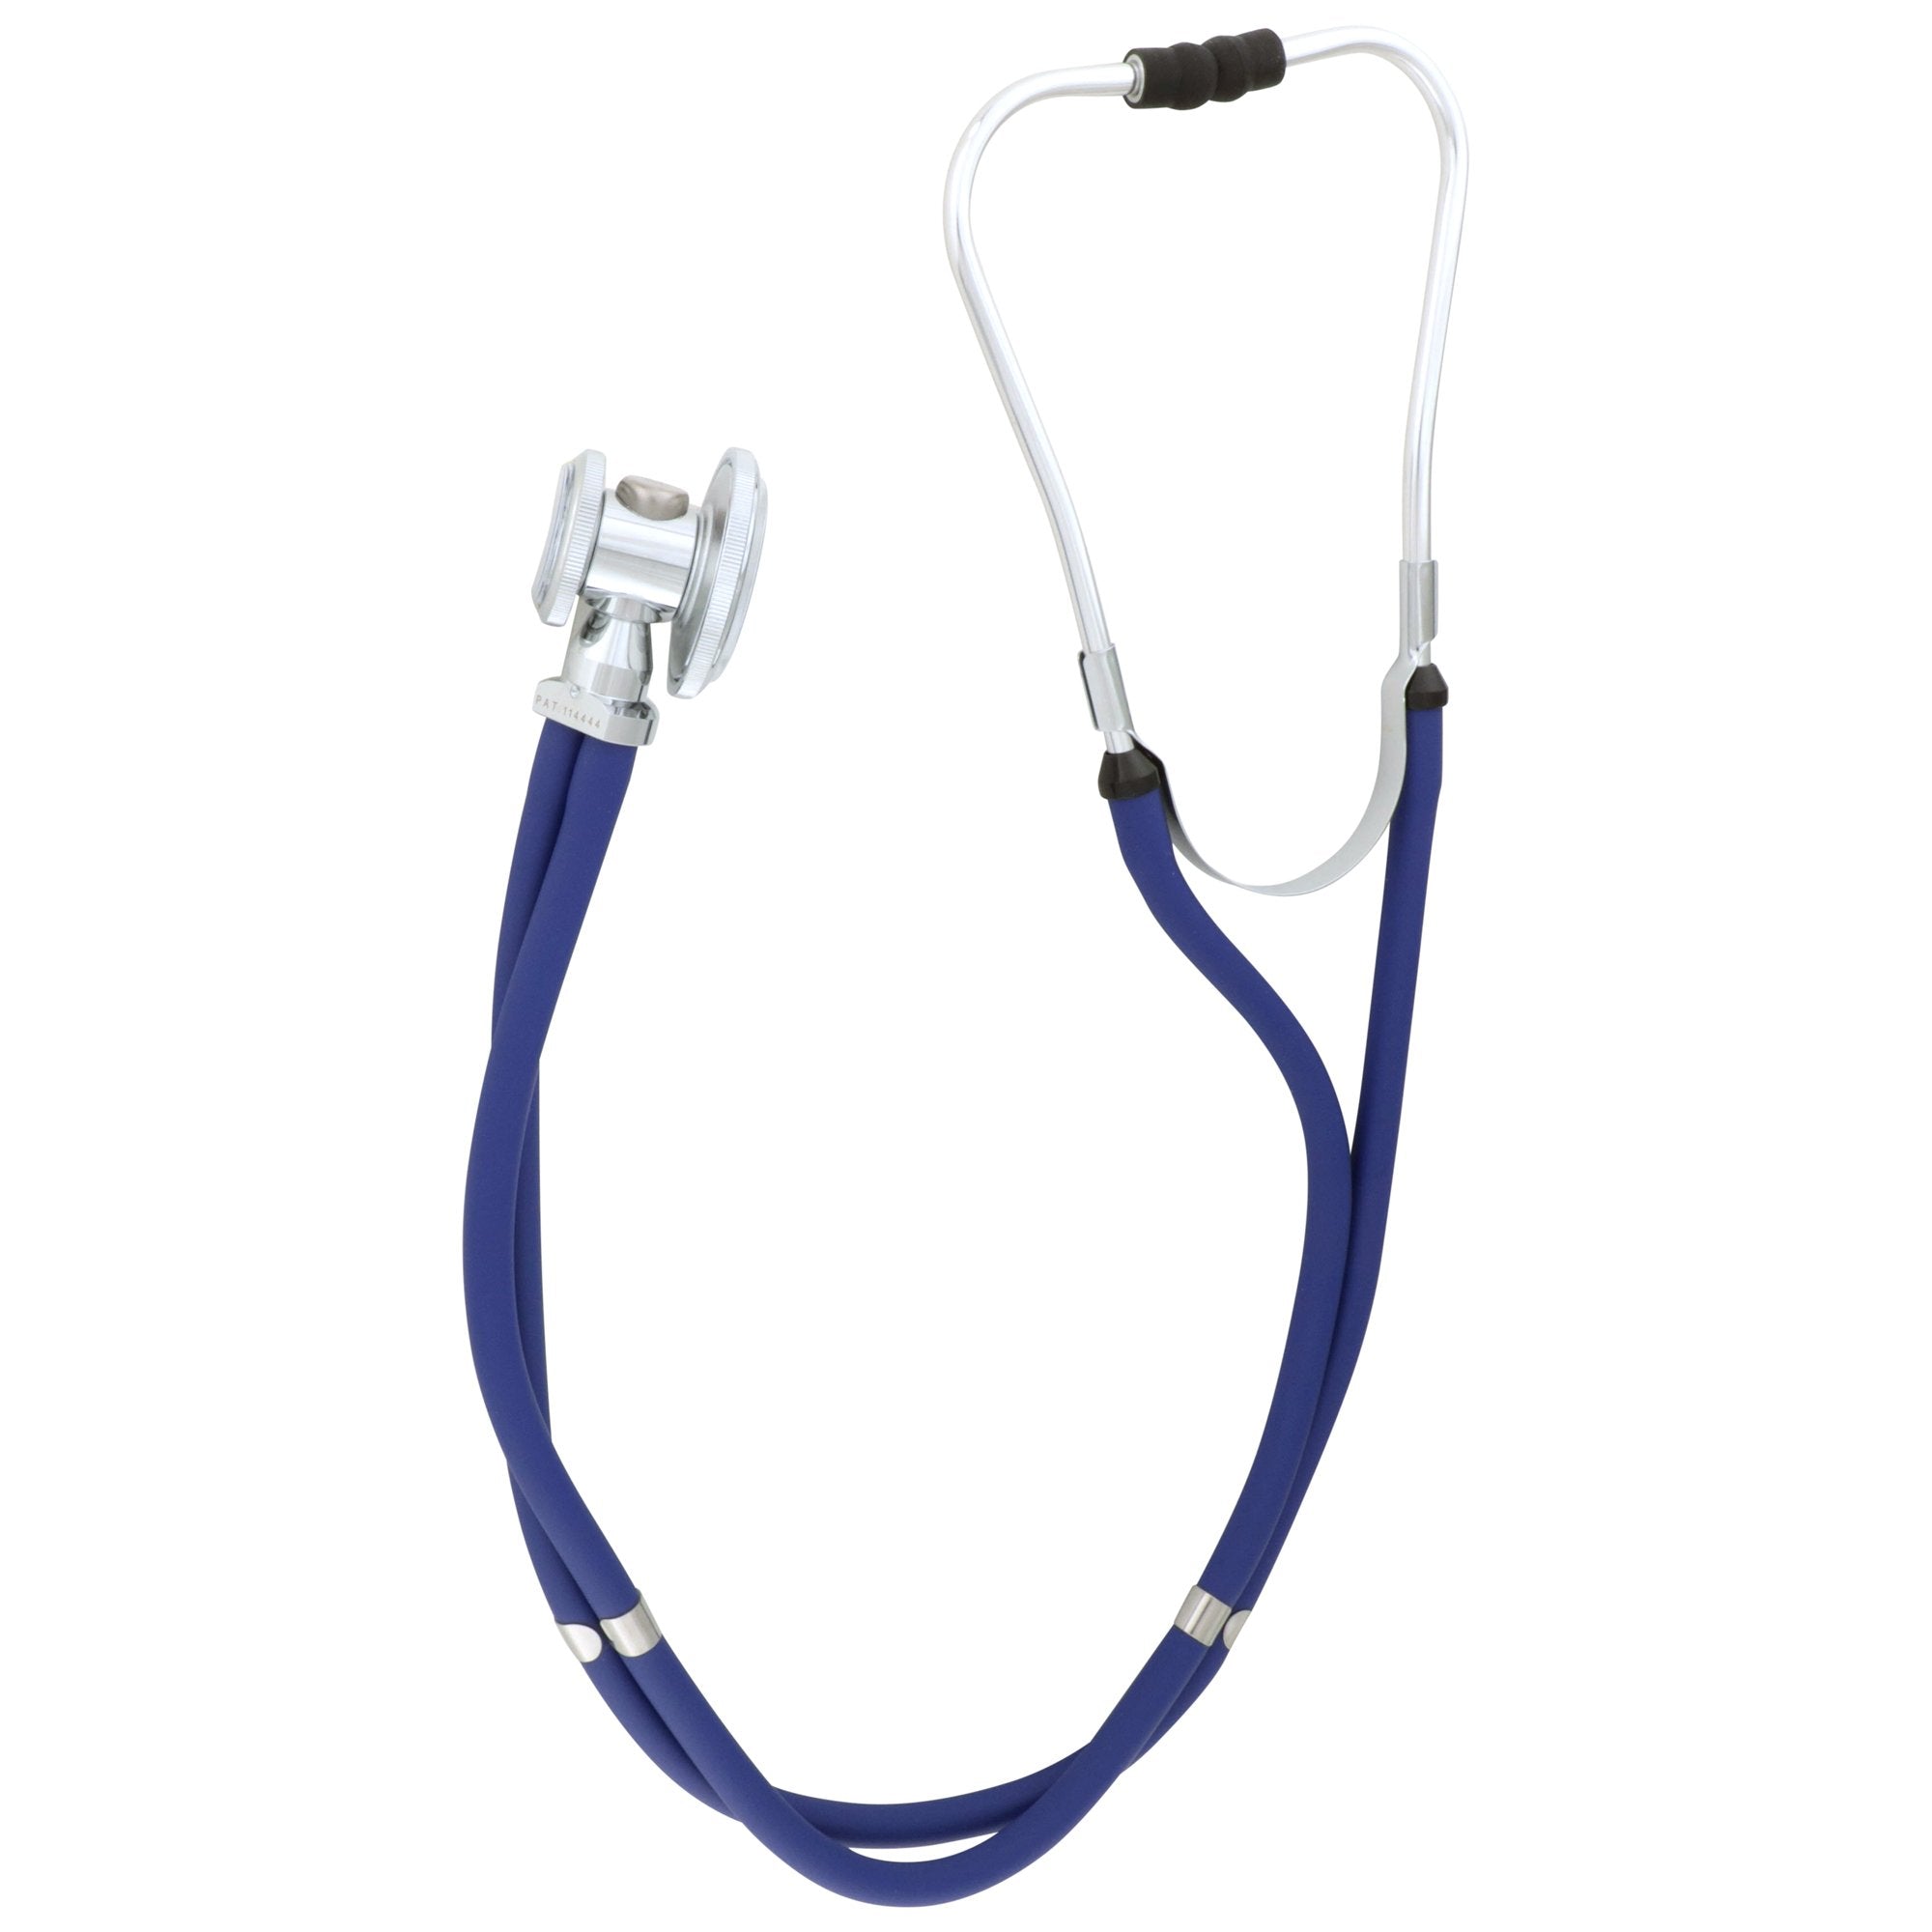 Reusable Aneroid / Stethoscope Set McKesson Brand 23 to 40 cm Adult Cuff Dual Head Sprague Pocket Aneroid